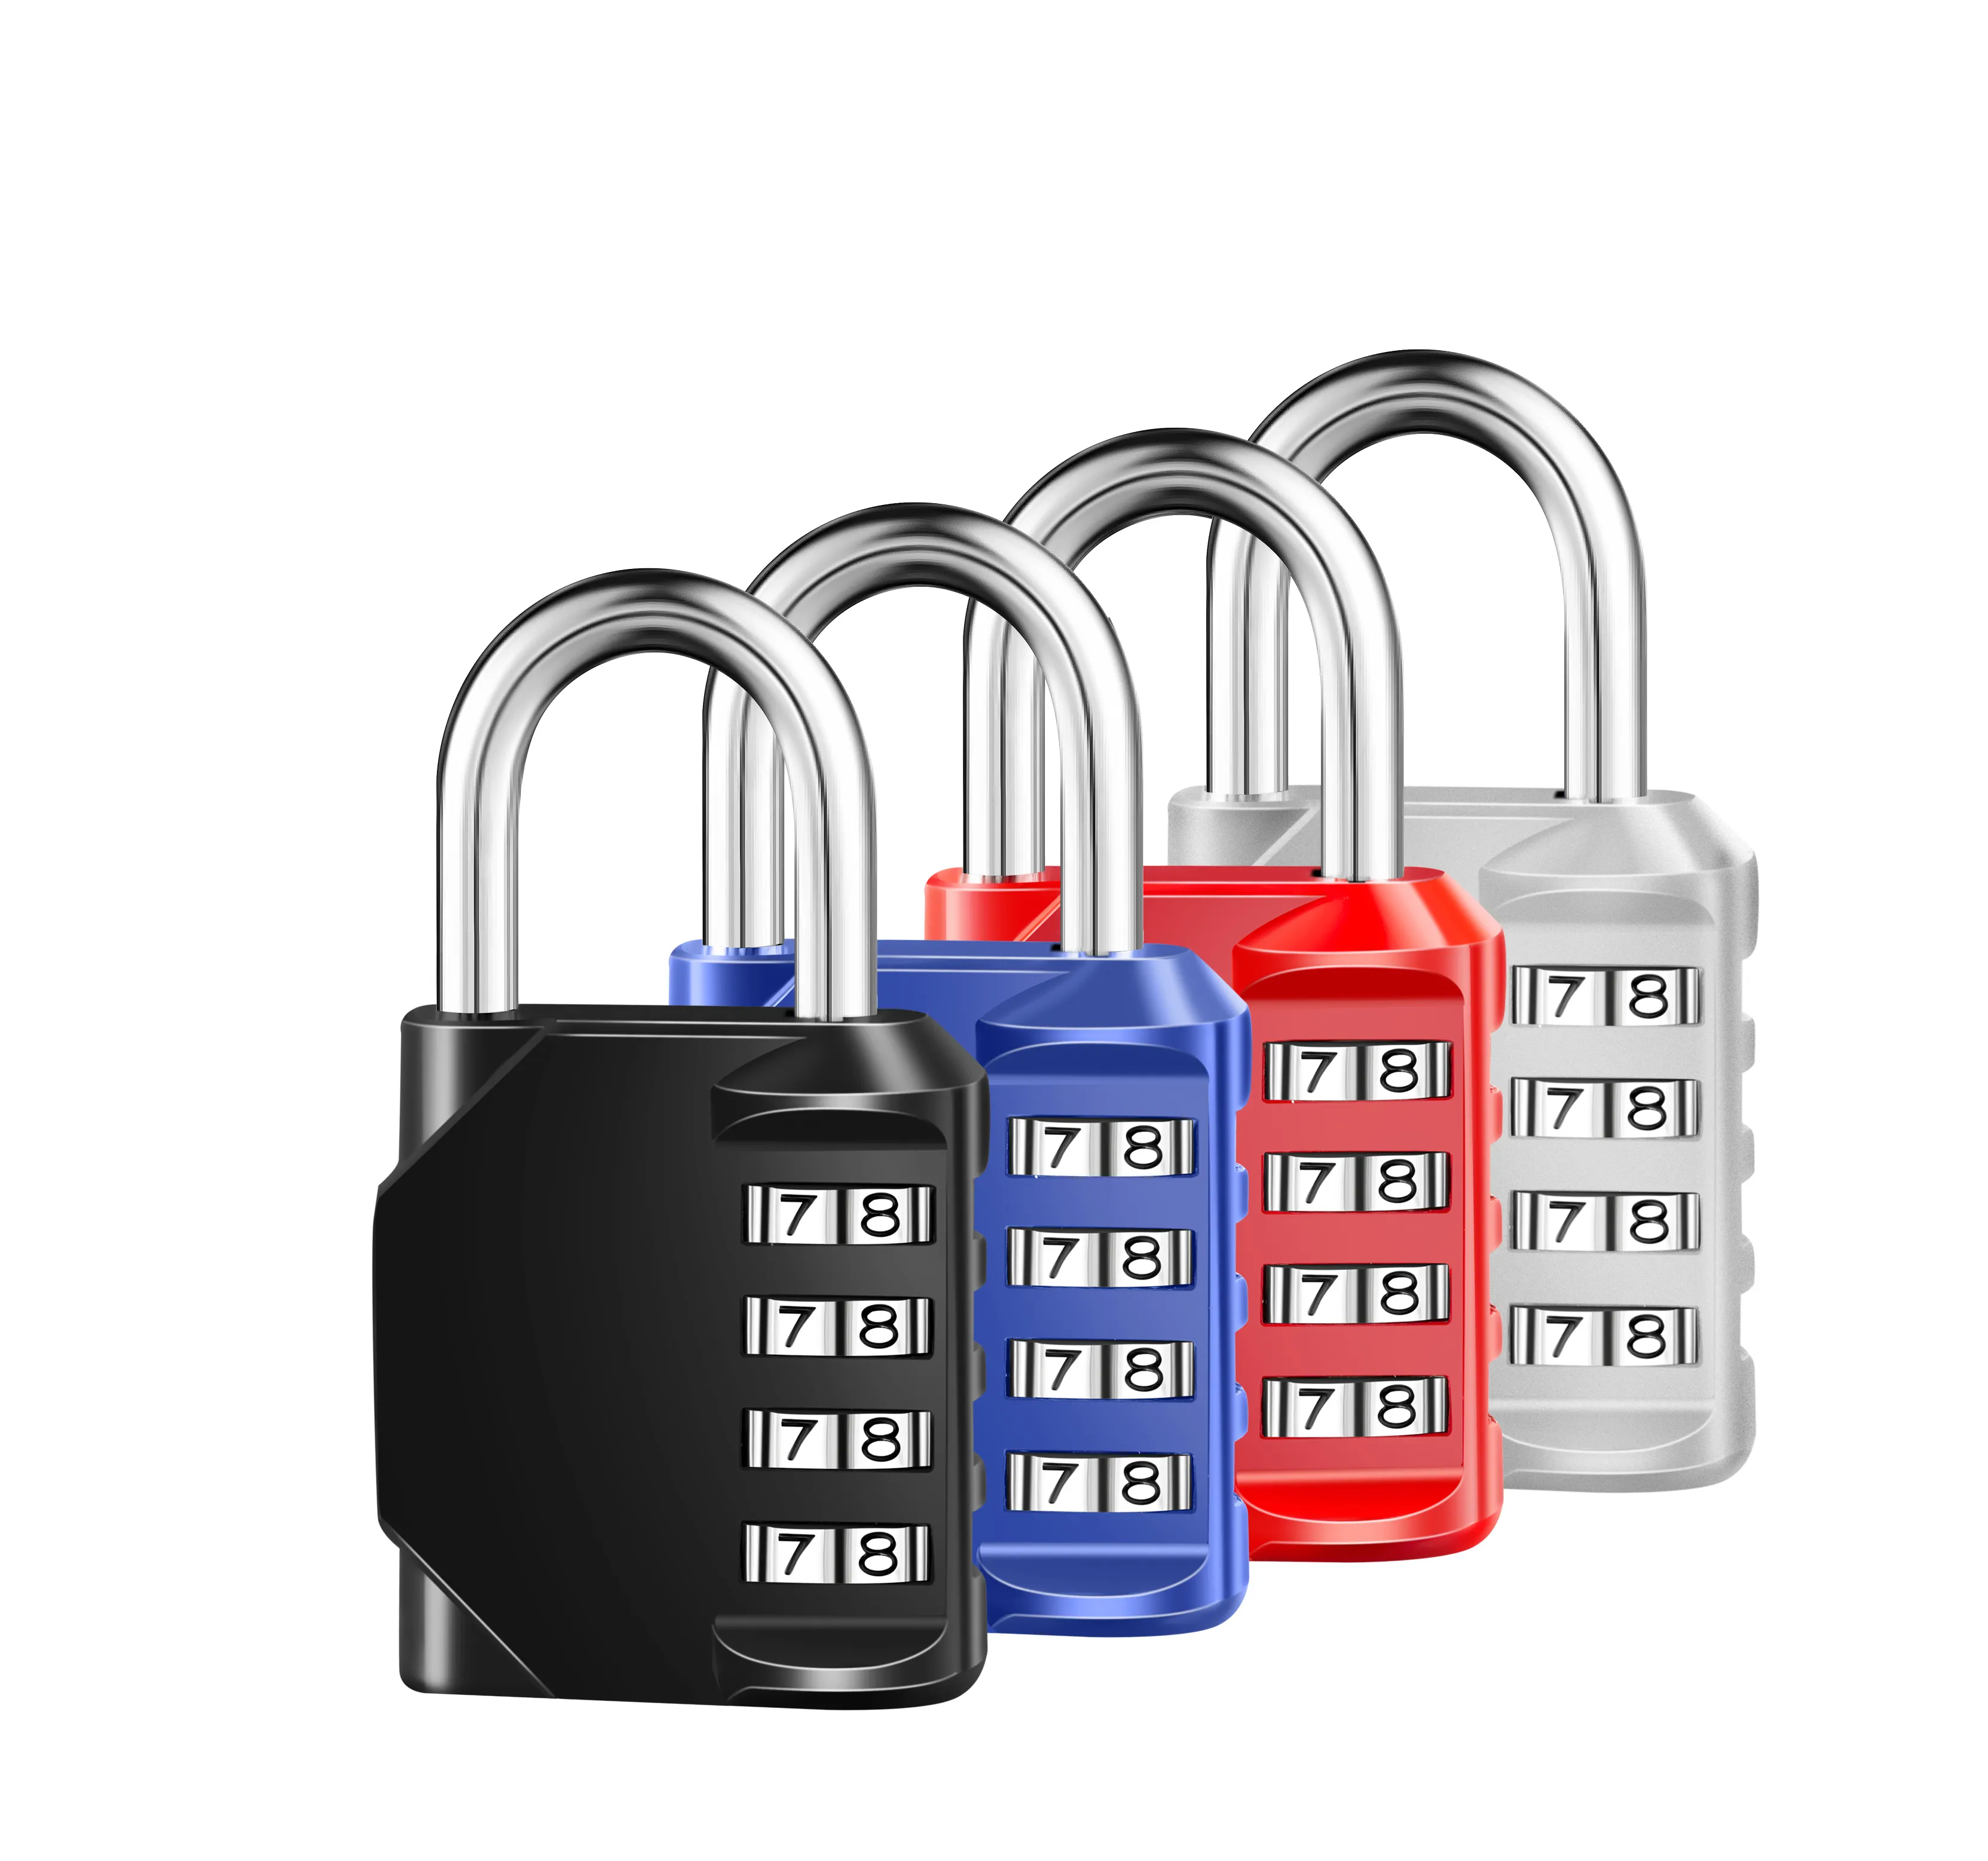 CH-604 resettable password combination padlock mailbox 4 digit/dial combination lock